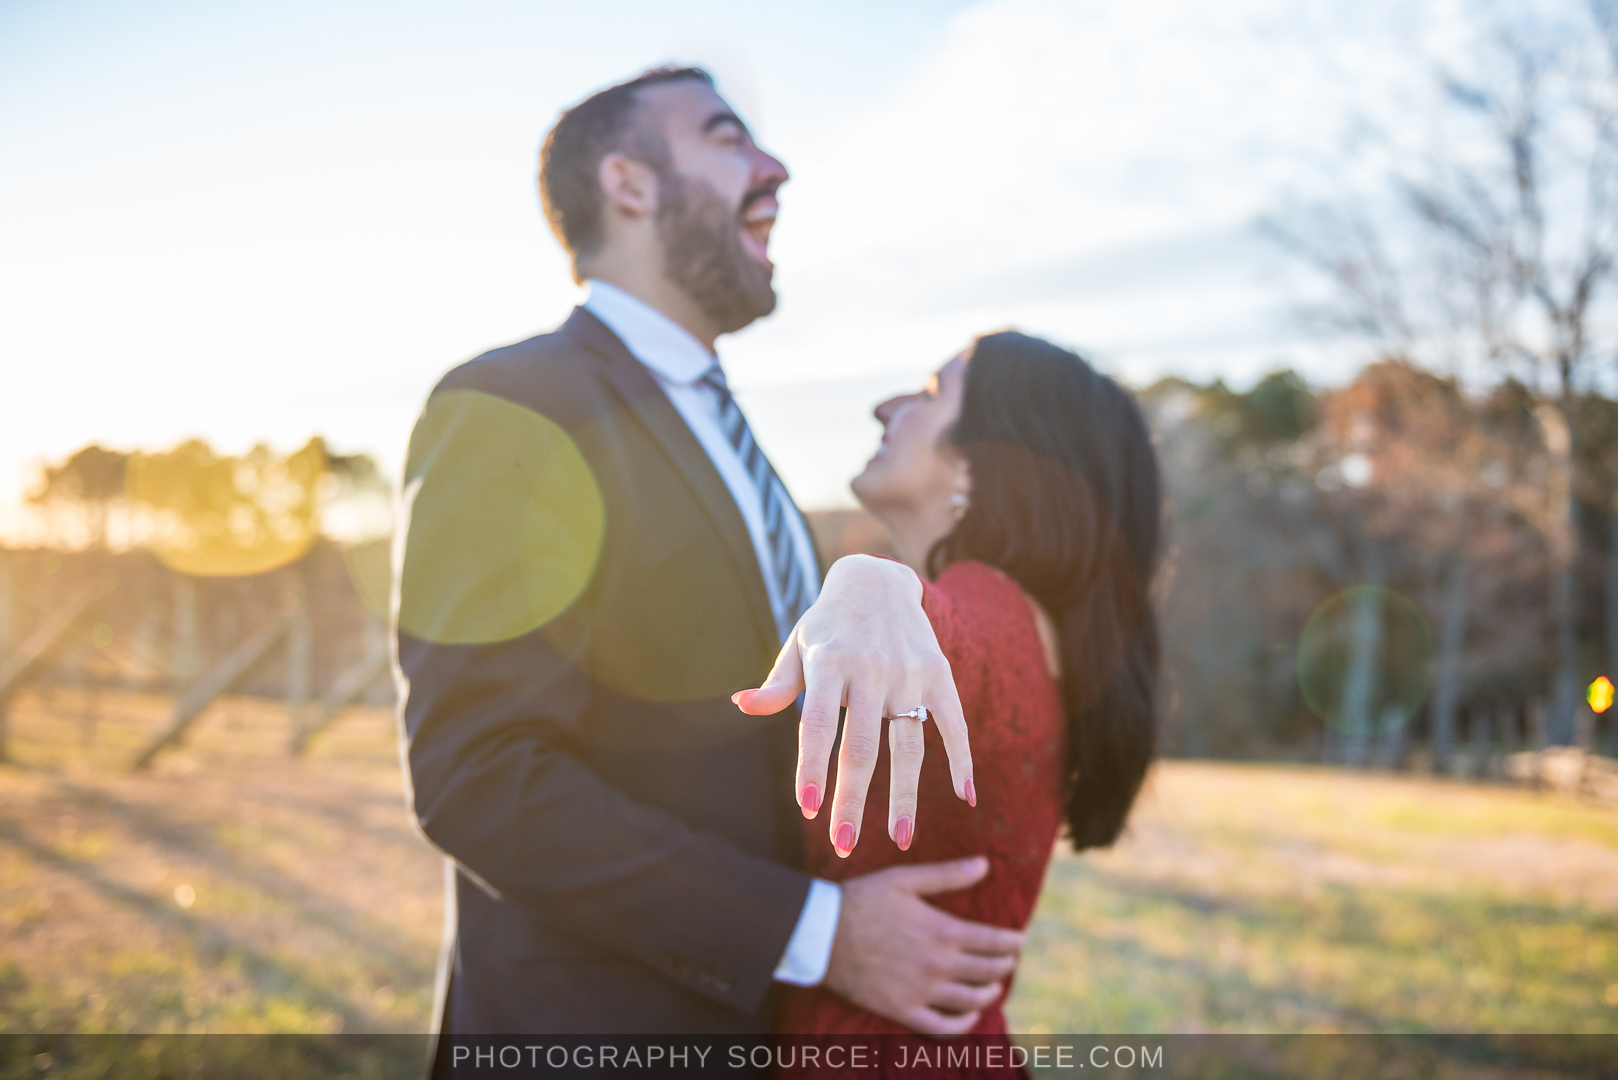 Fall Engagement Photos - Candid Photos